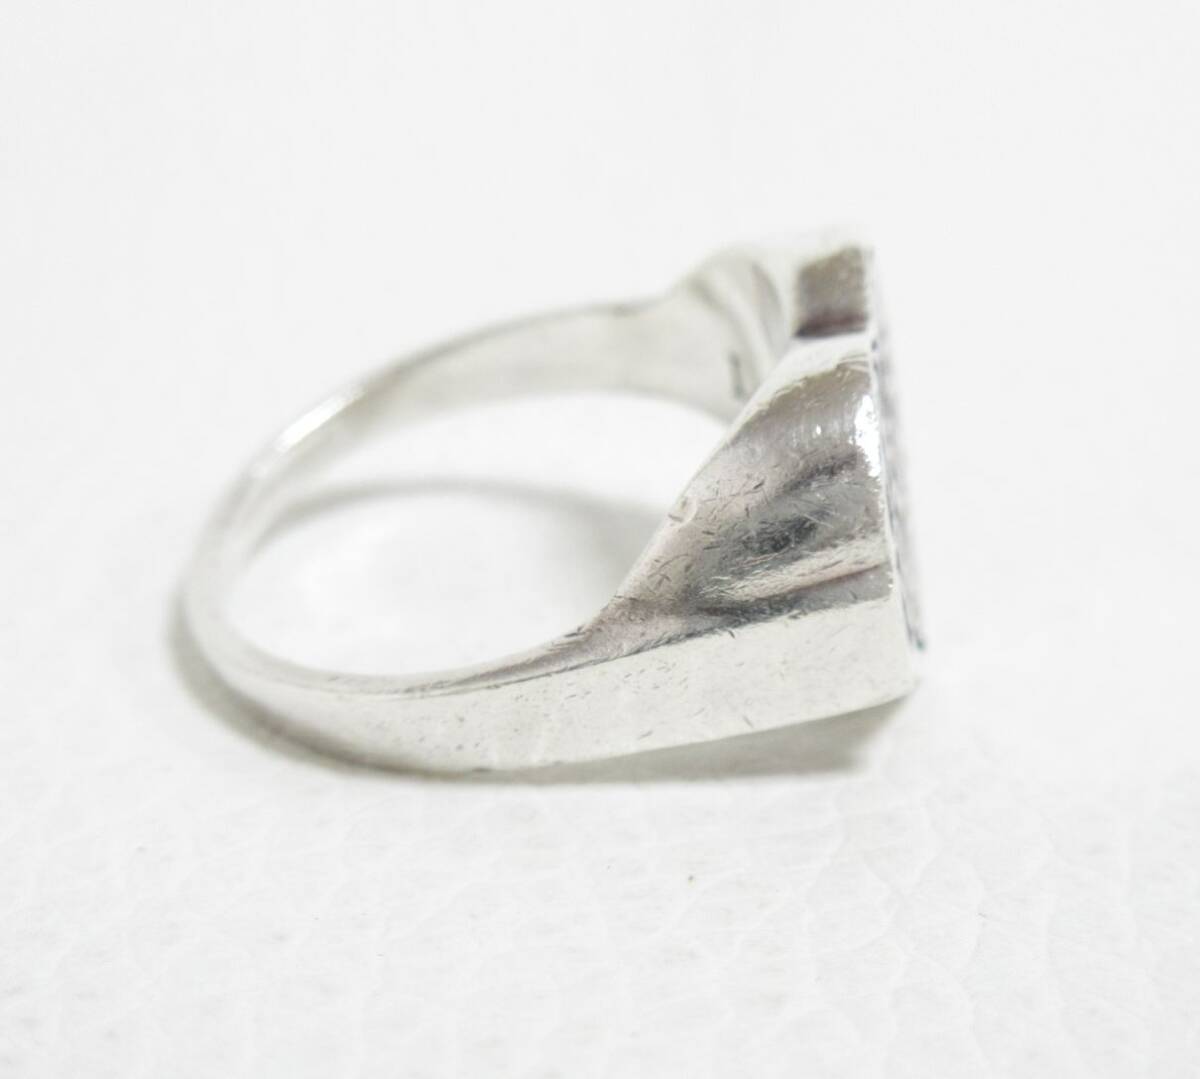 12621*[SALE]TATTOO STUDIO YAMADAta палец на ноге Studio yamada Heart Logo кольцо / кольцо [ примерно 13 номер ] серебряный б/у USED